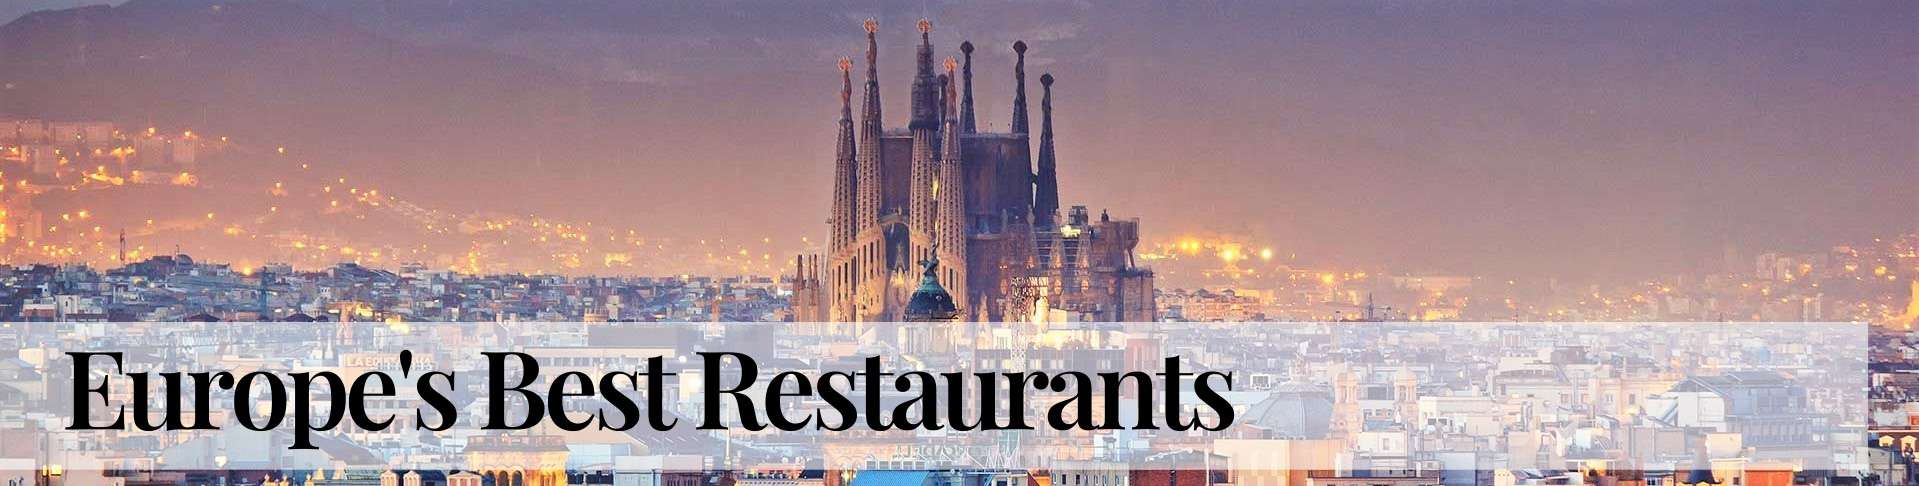 Europe's Best Restaurants